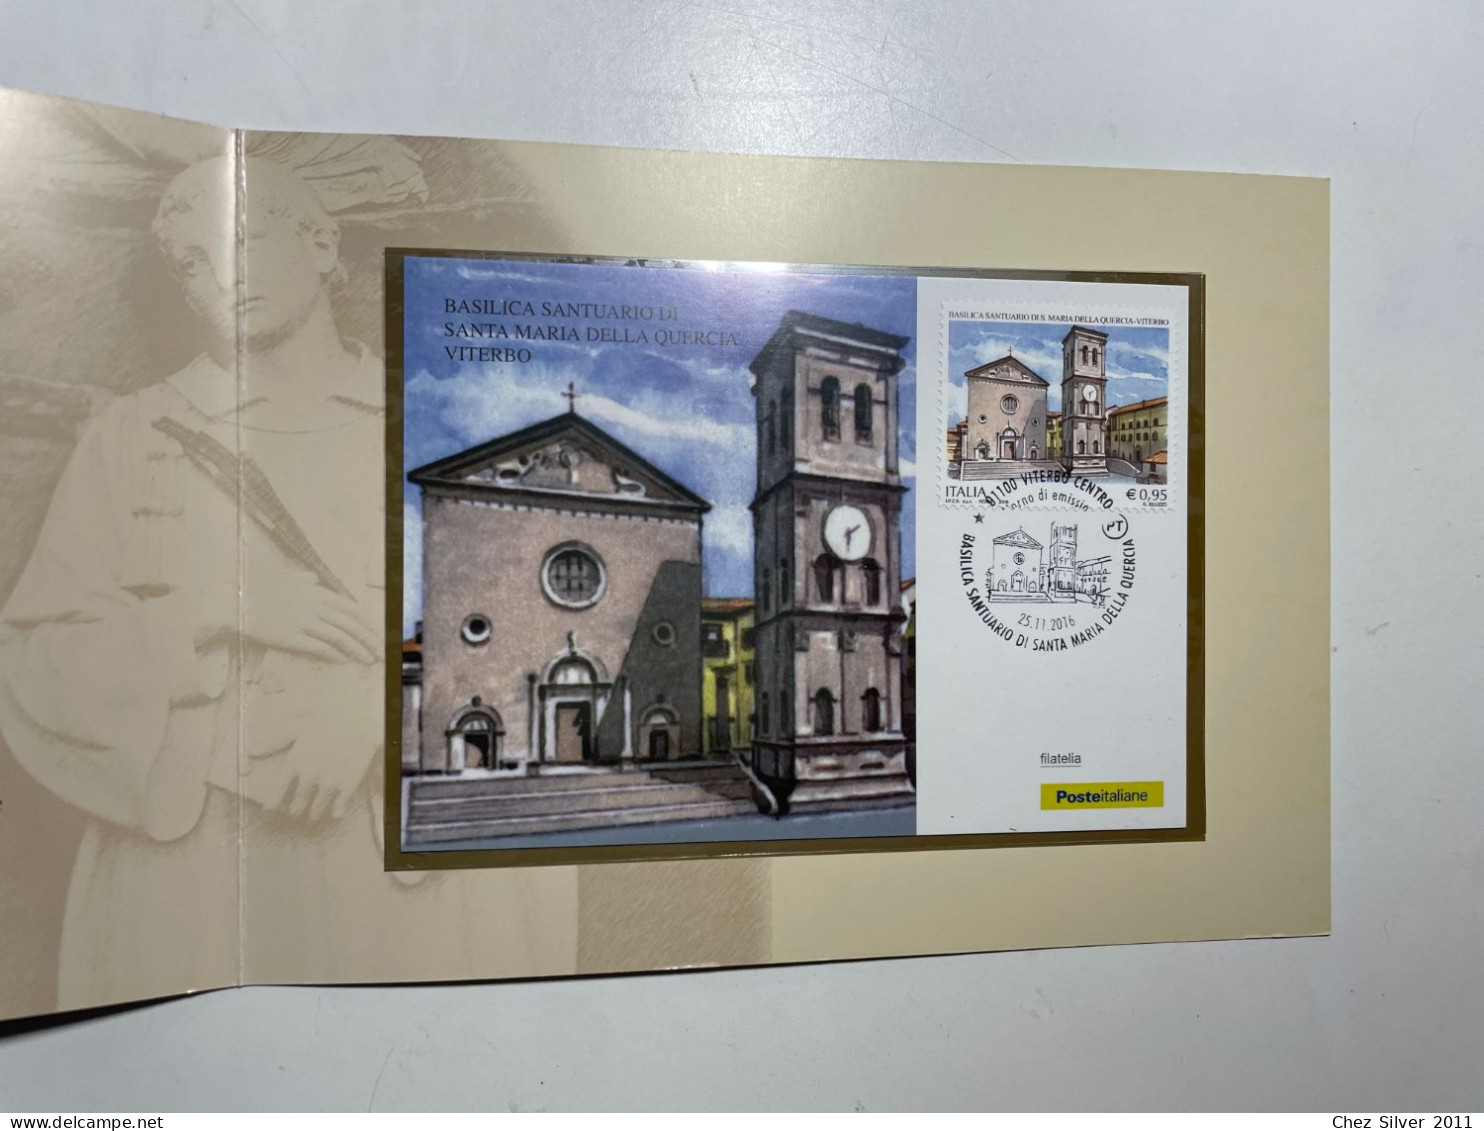 2016 Folder Basilica Santuario Santa Maria Della Quercia Viterbo  LE 6349 - Folder